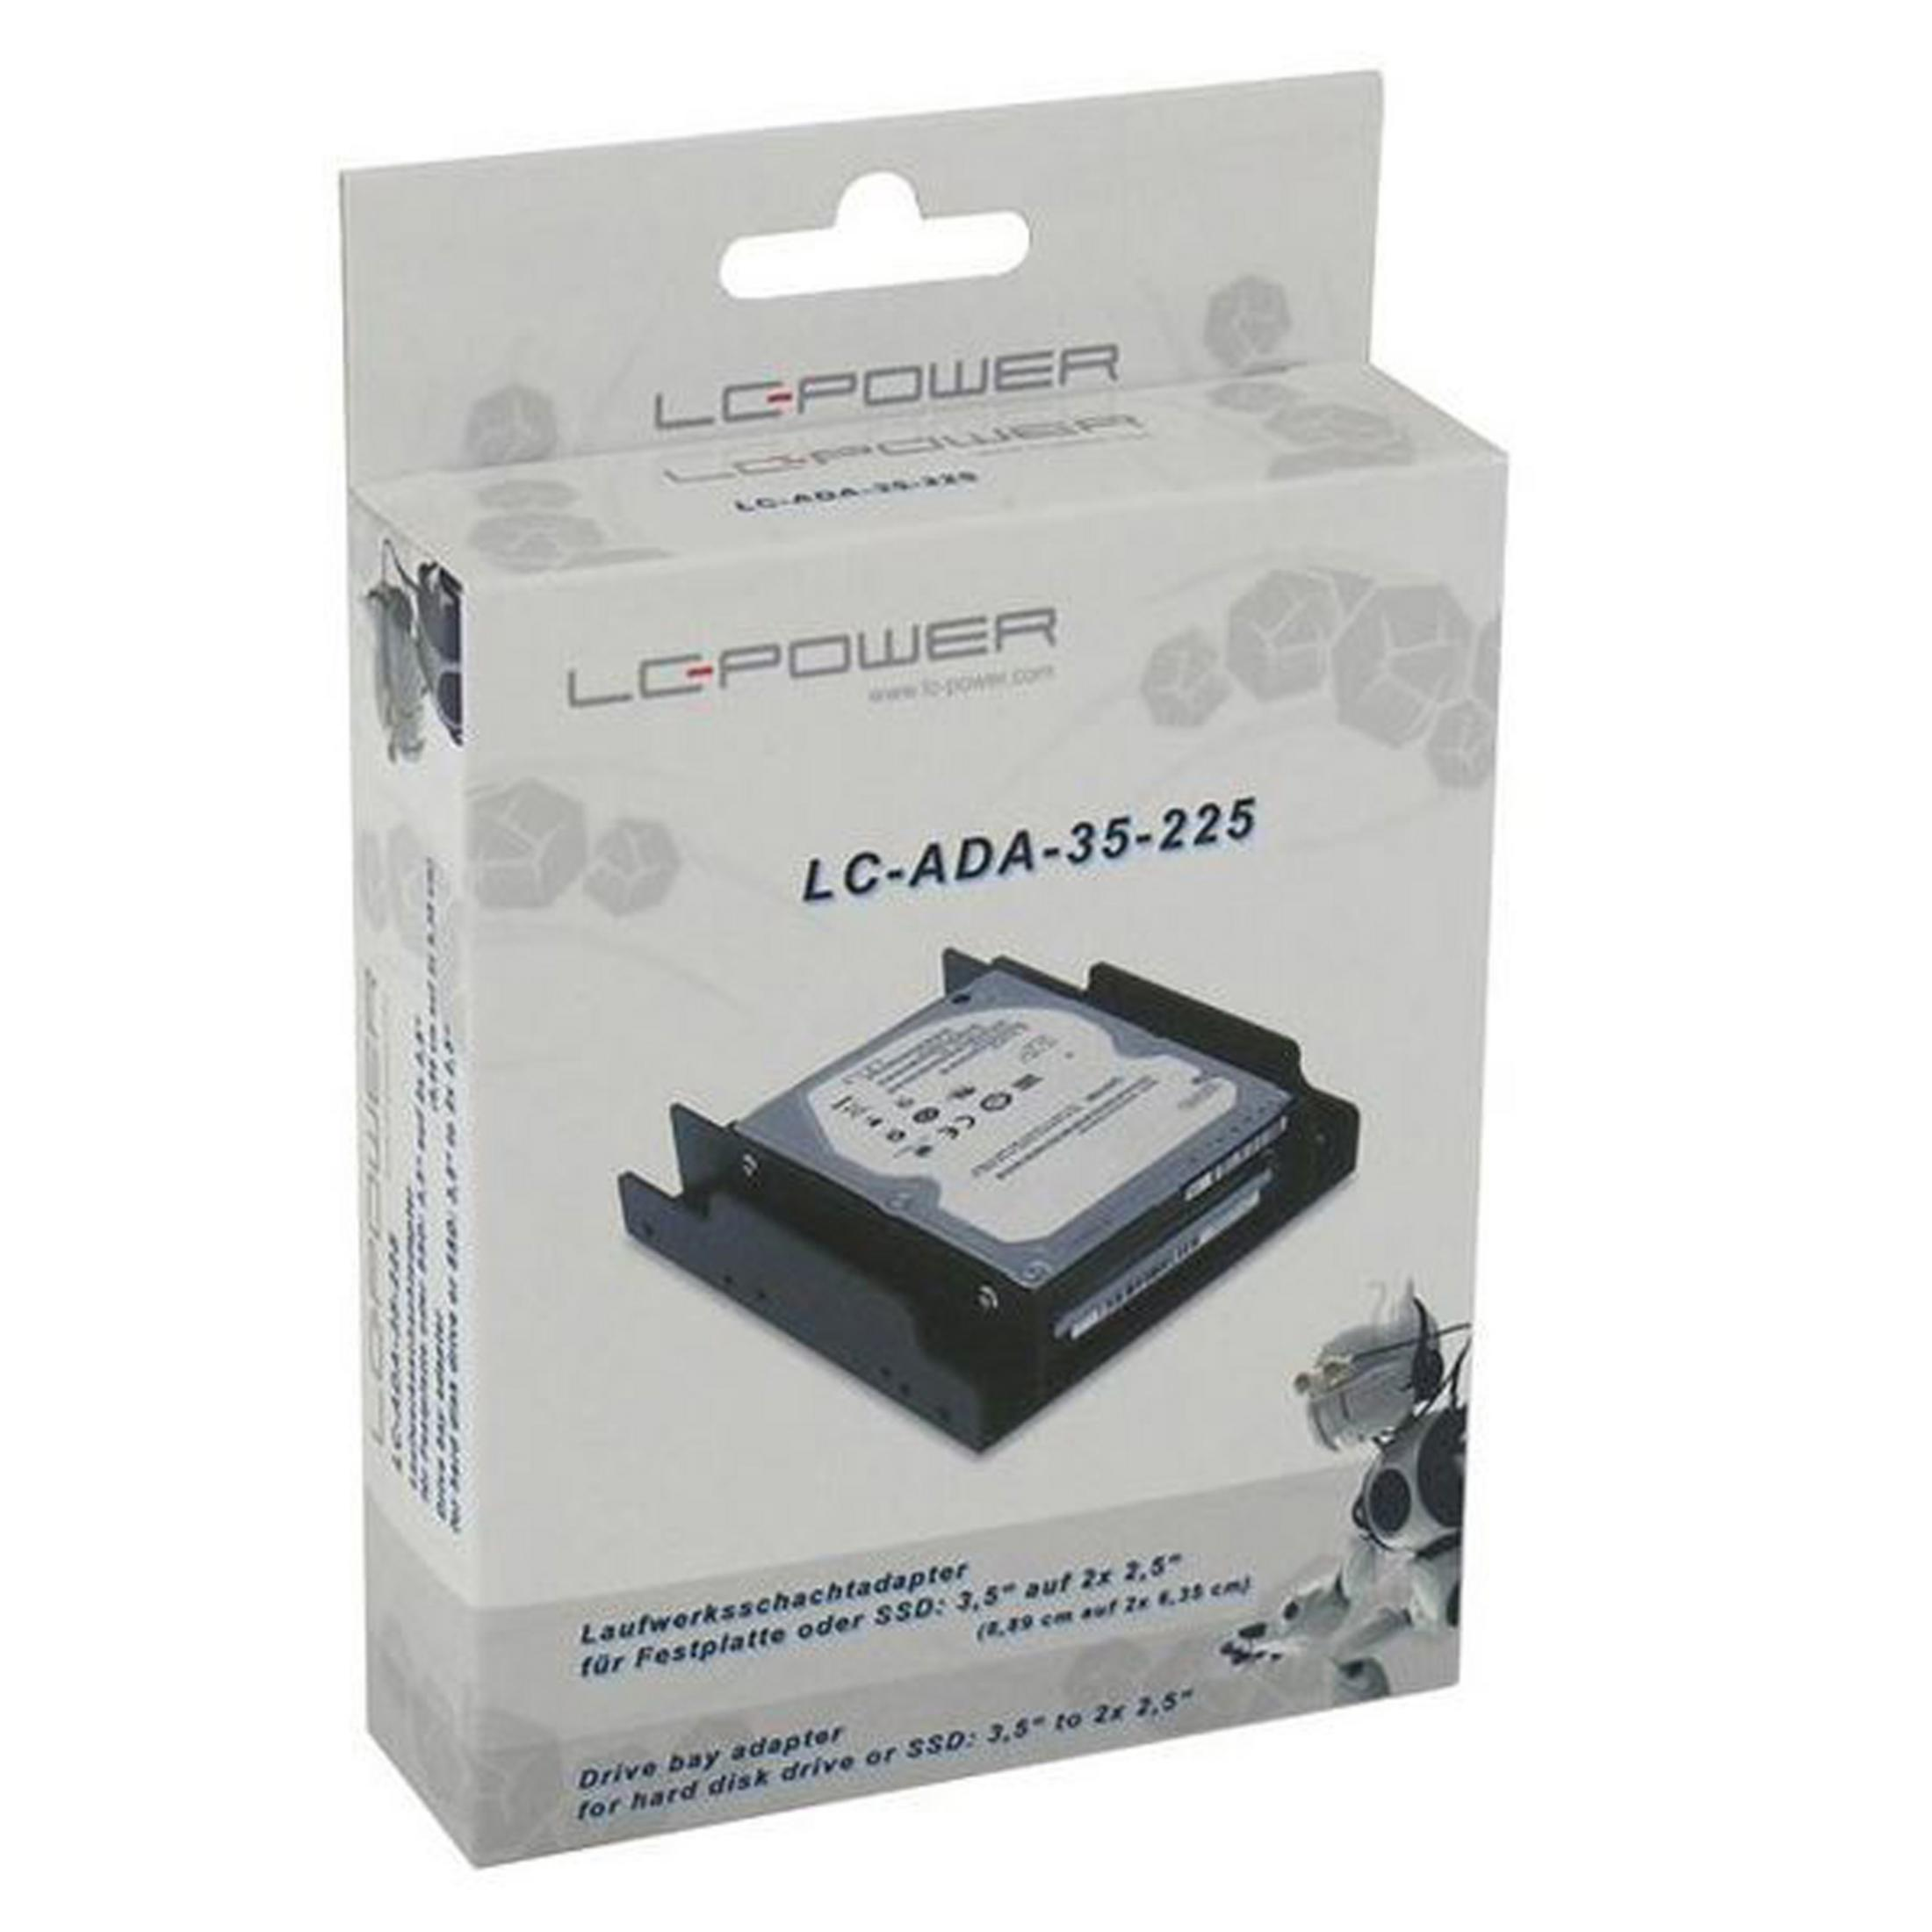 LC POWER Festplattenadapter LC-ADA-35-225 EINBAURAHMEN